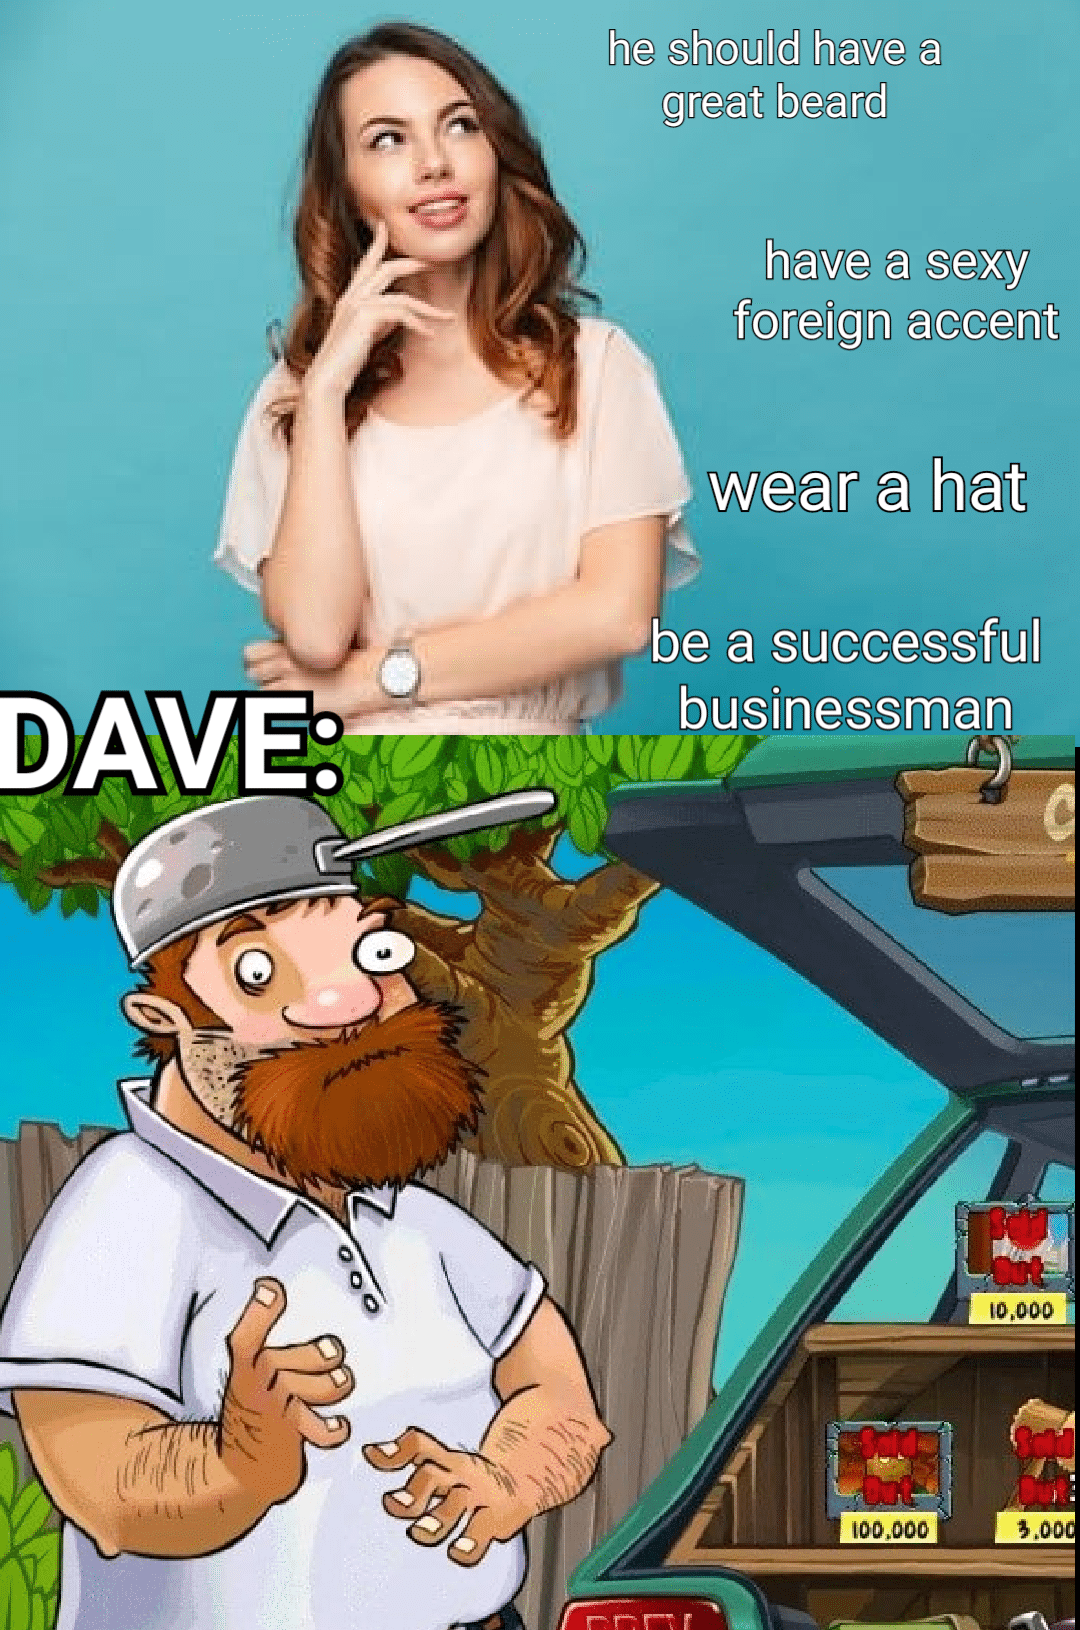 Dank, Dave, Danny Devito, CRAZY Dank Memes Dank, Dave, Danny Devito, CRAZY text: he should have a great beard have a sexy foreign accent wear a hat be a successful businessman 100.000 10.000 3.00 